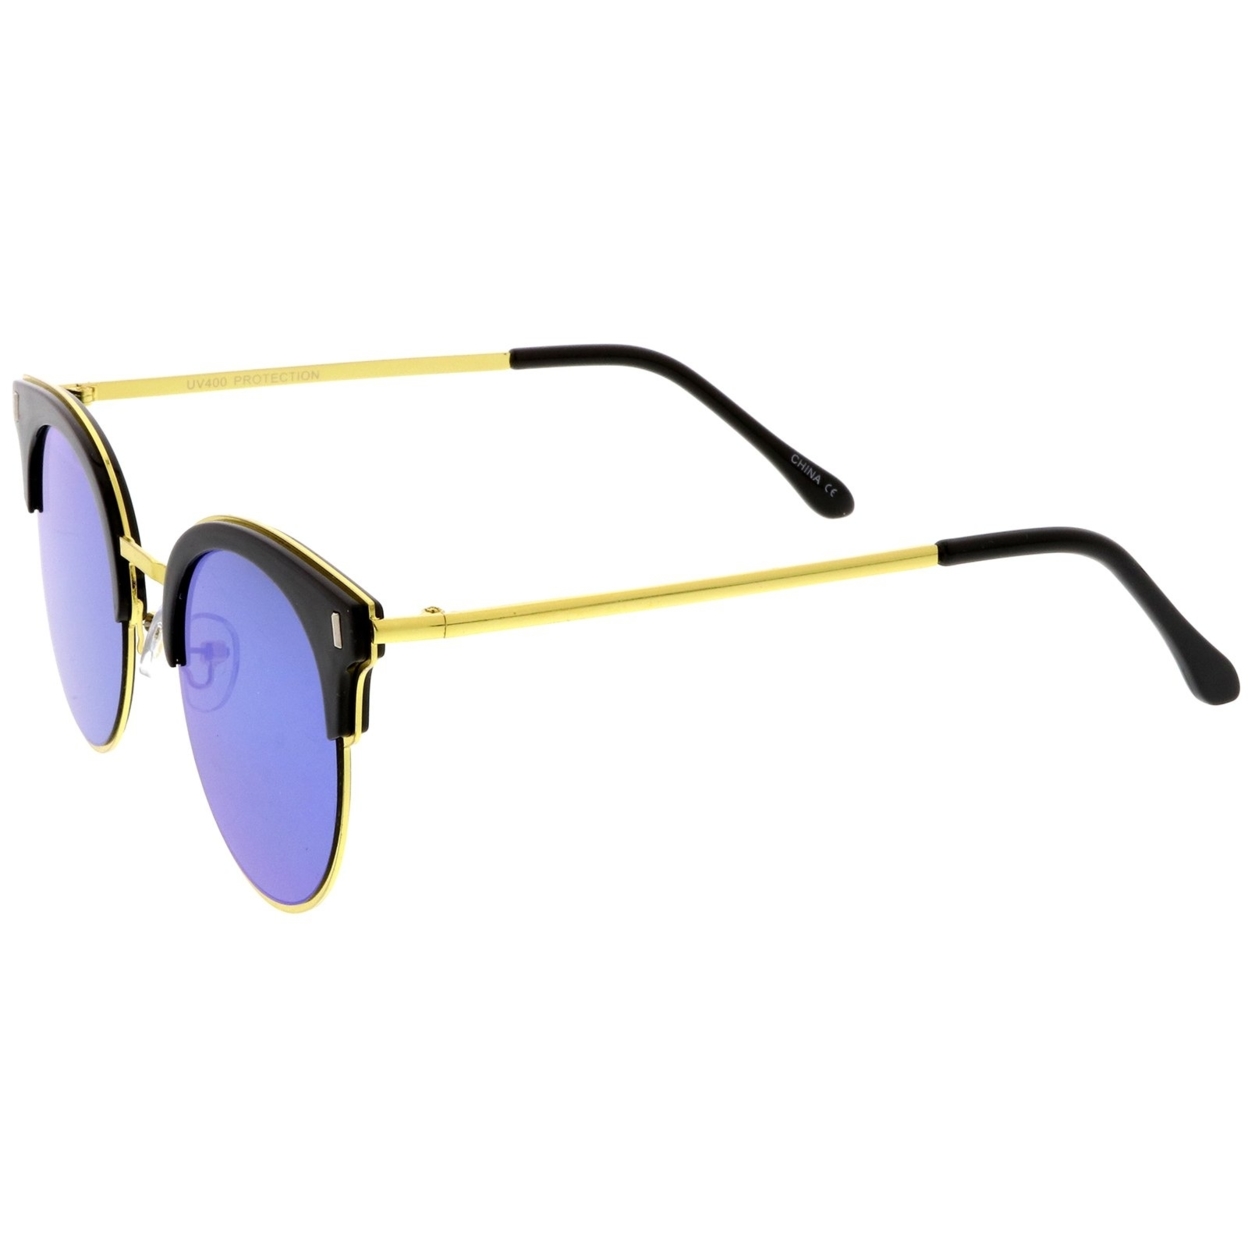 Modern Half Frame Round Colored Mirror Flat Lens Horn Rimmed Sunglasses 49mm - Black-Gold / Orange Mirror